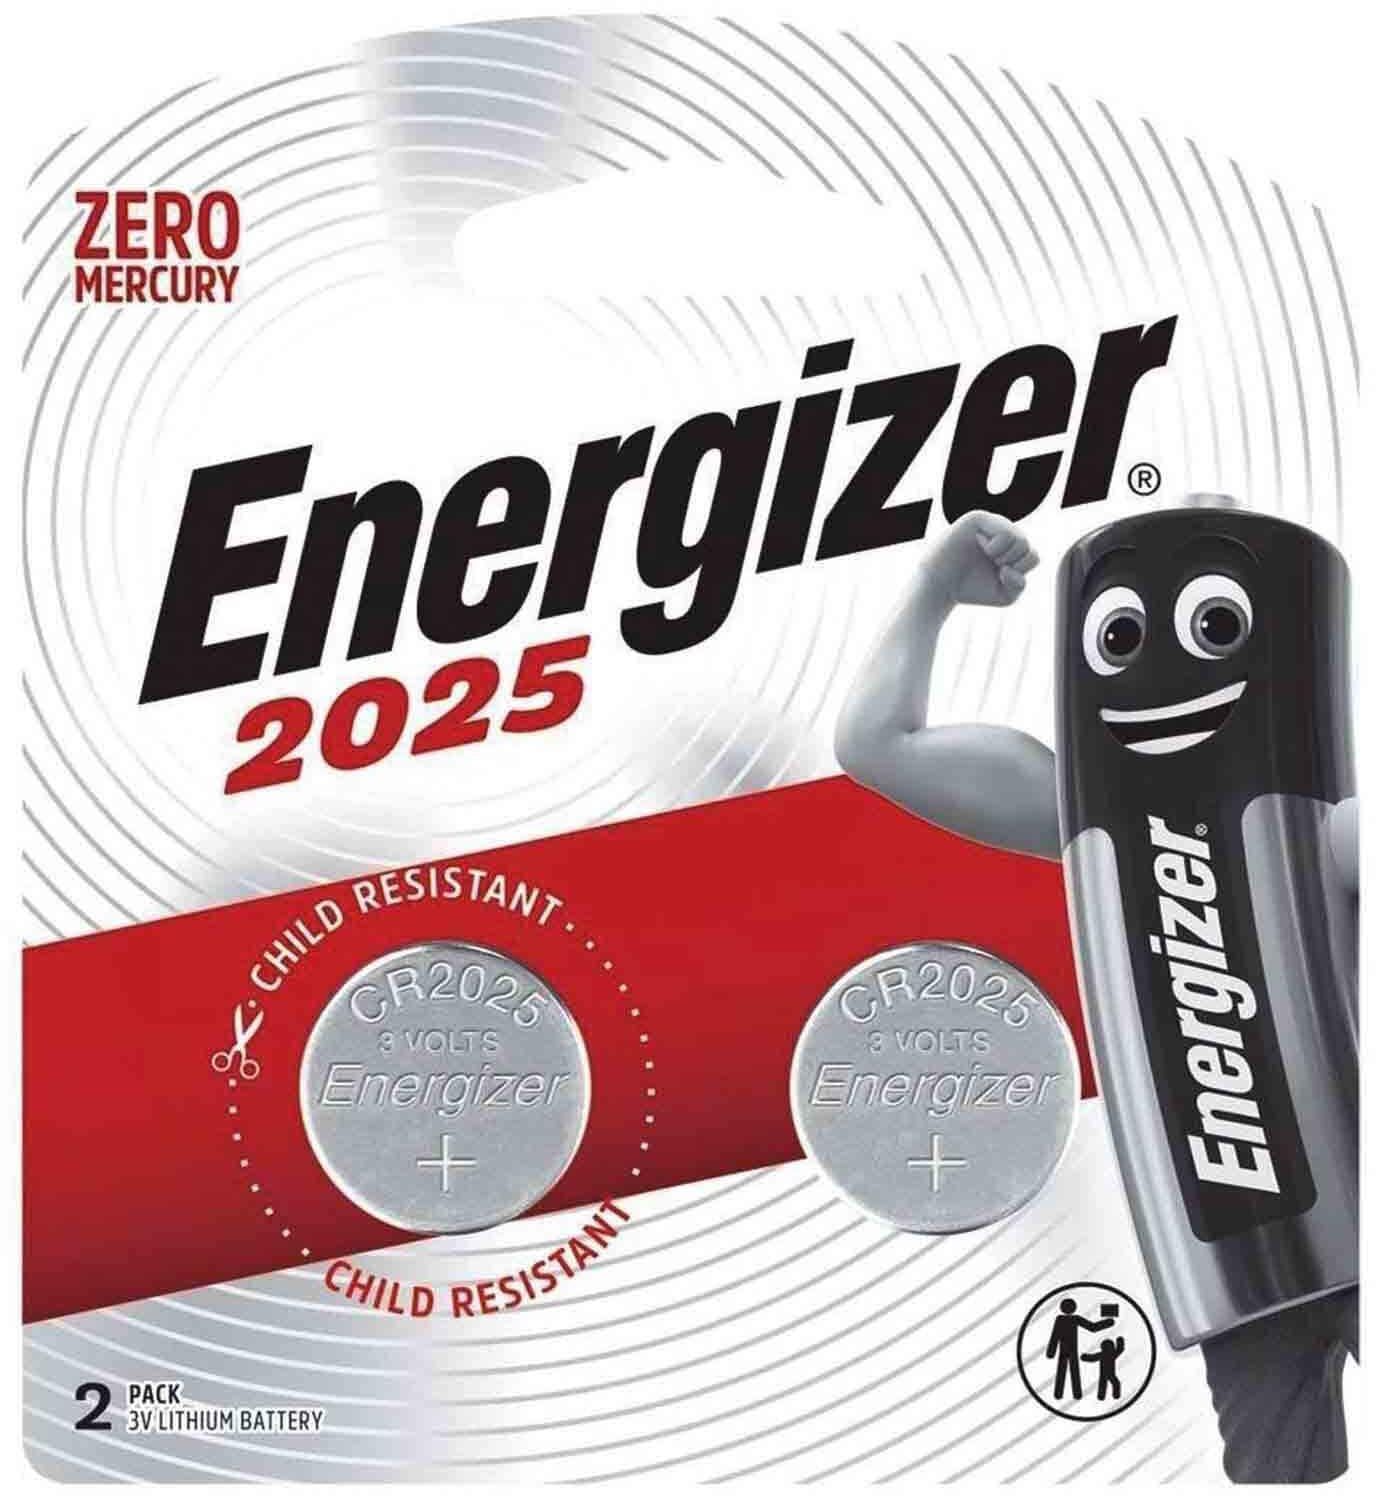 Energizer 2025 Lithium Coin Battery - 3 Volt - 2 Batteries